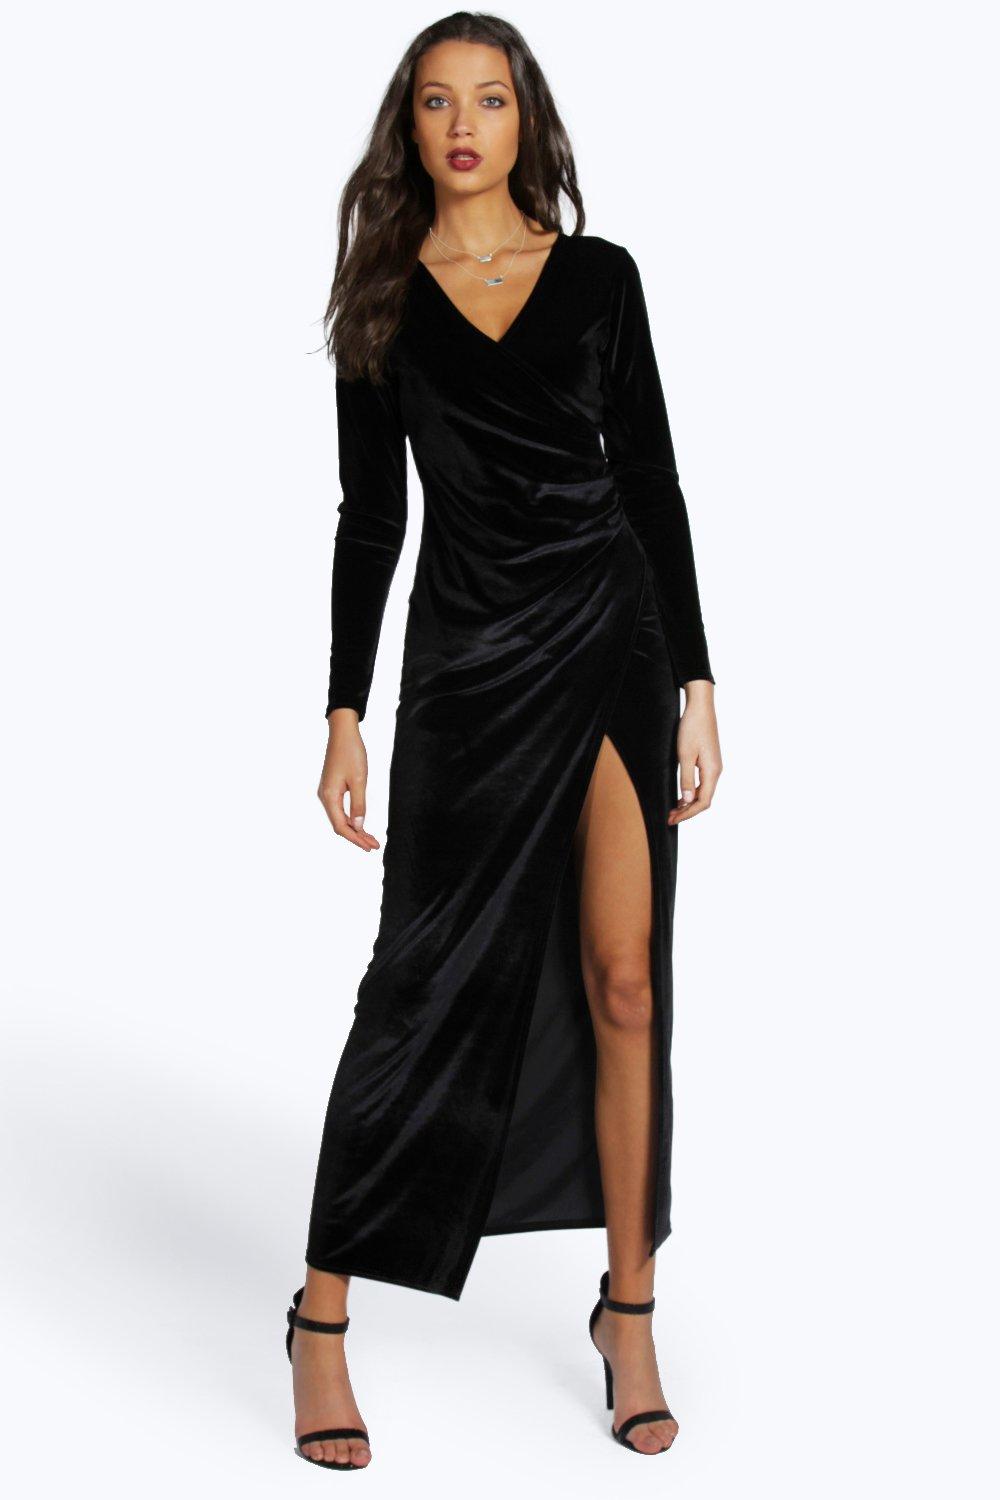 black long sleeve maxi dress with side split